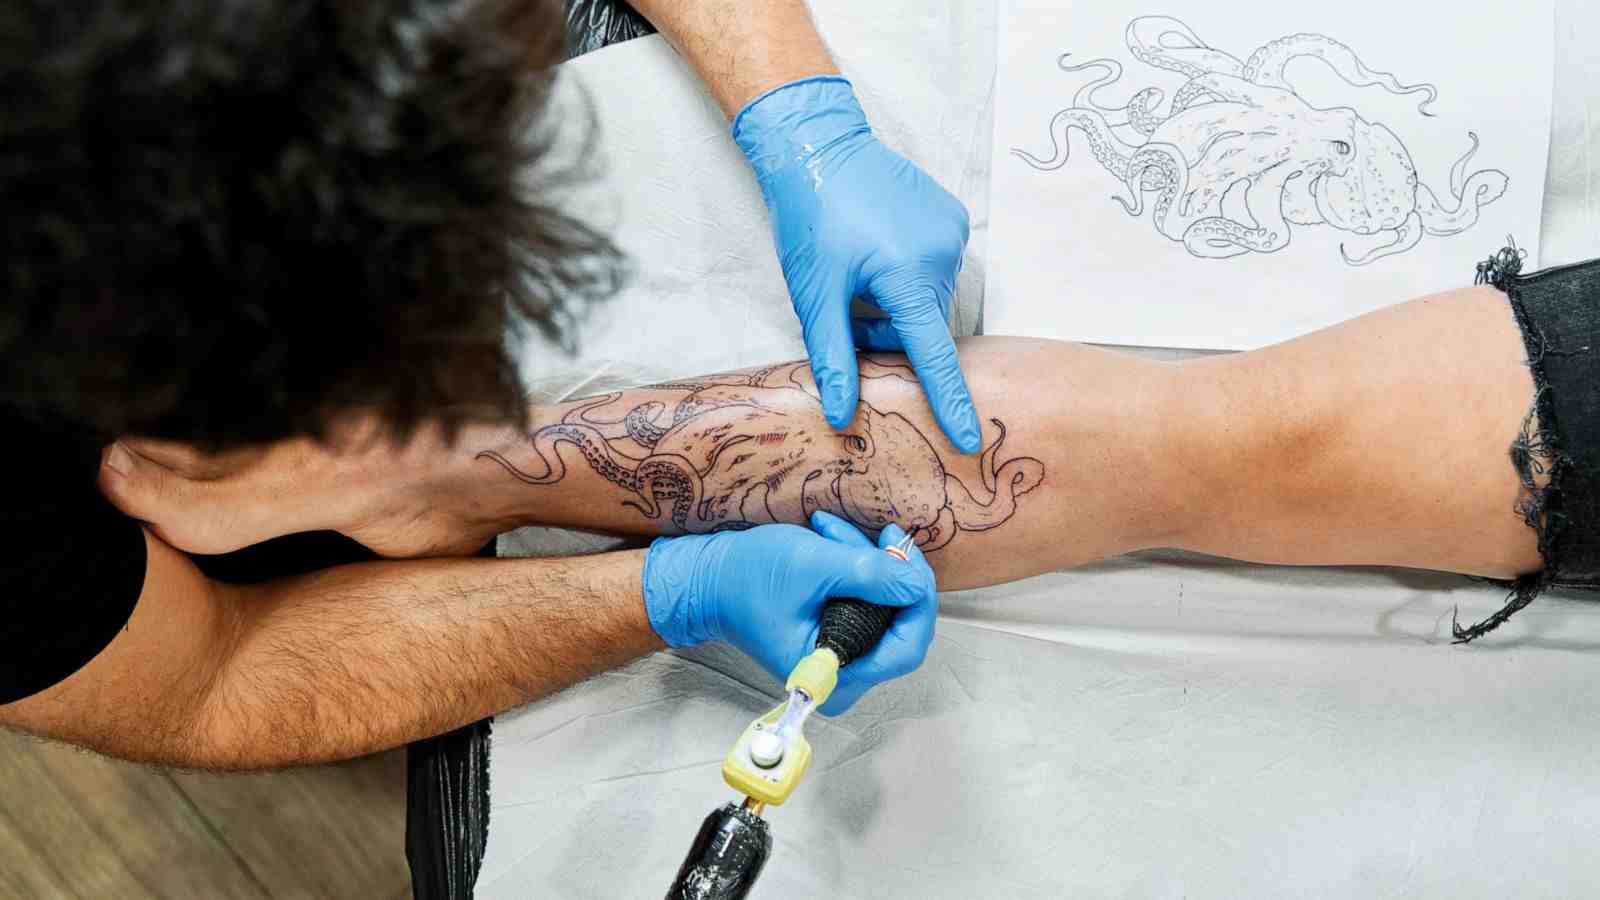 Does tattoo affect student visa UK?